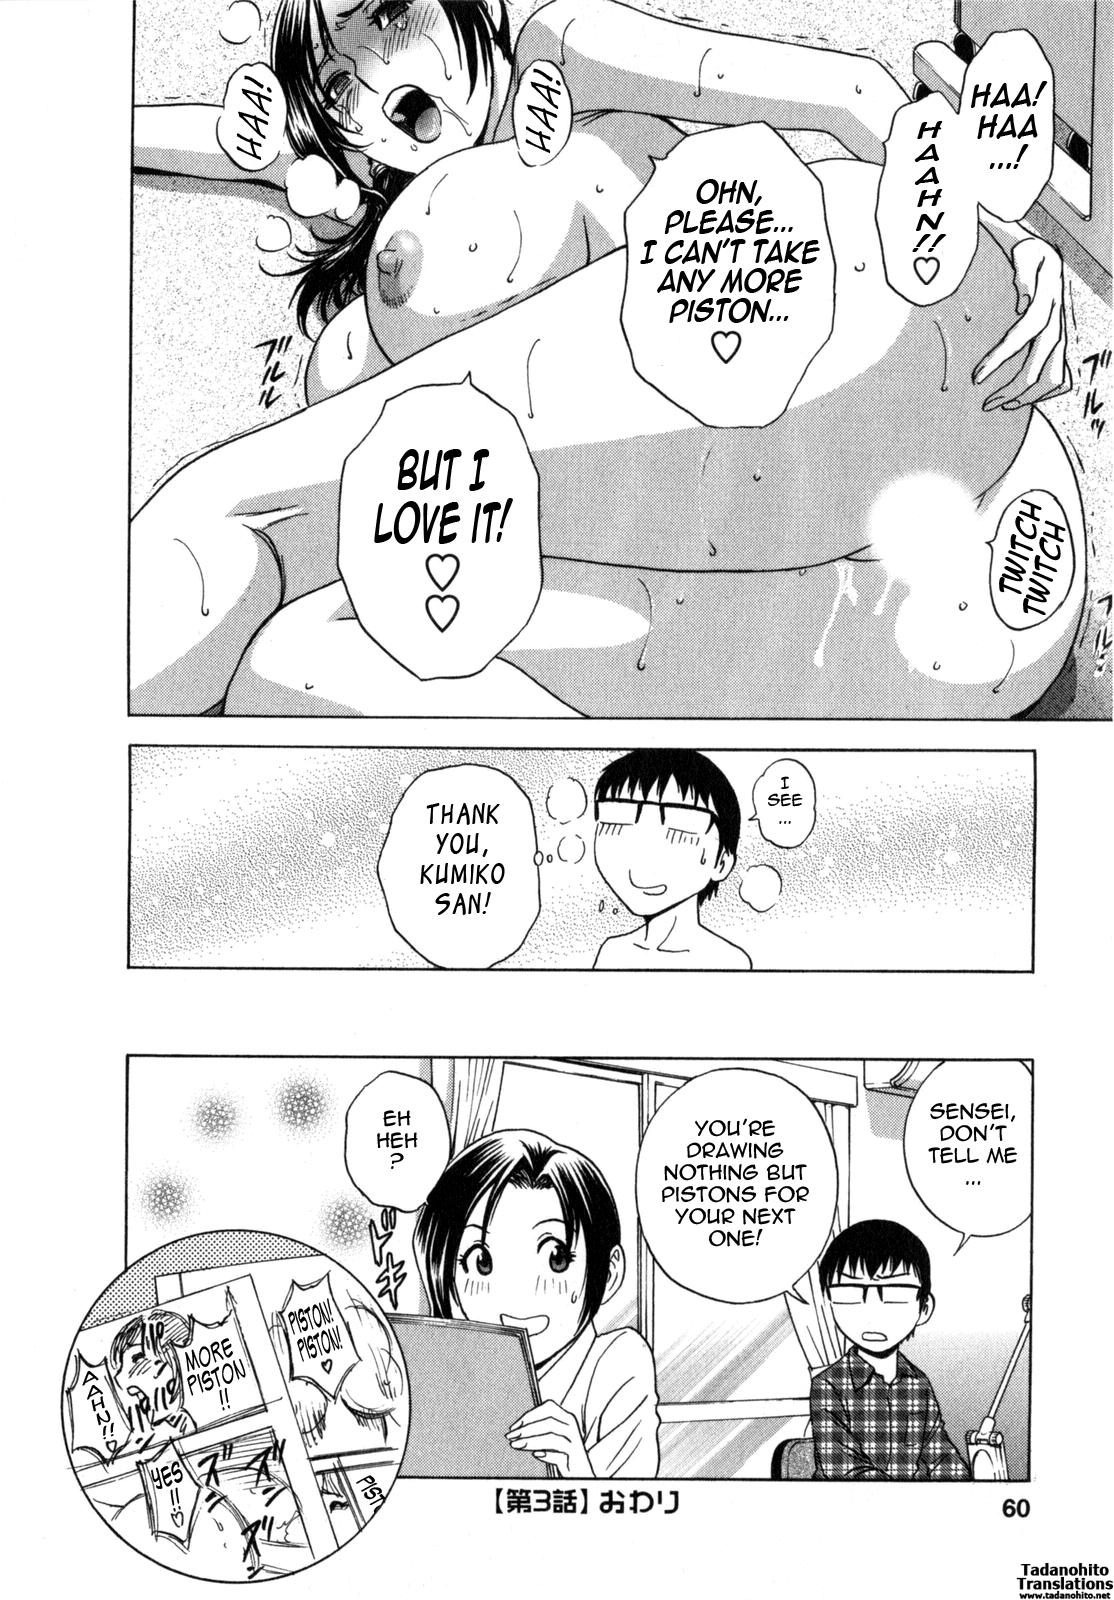 [Hidemaru] Life with Married Women Just Like a Manga 1 - Ch. 1-8 [English] {Tadanohito} 62